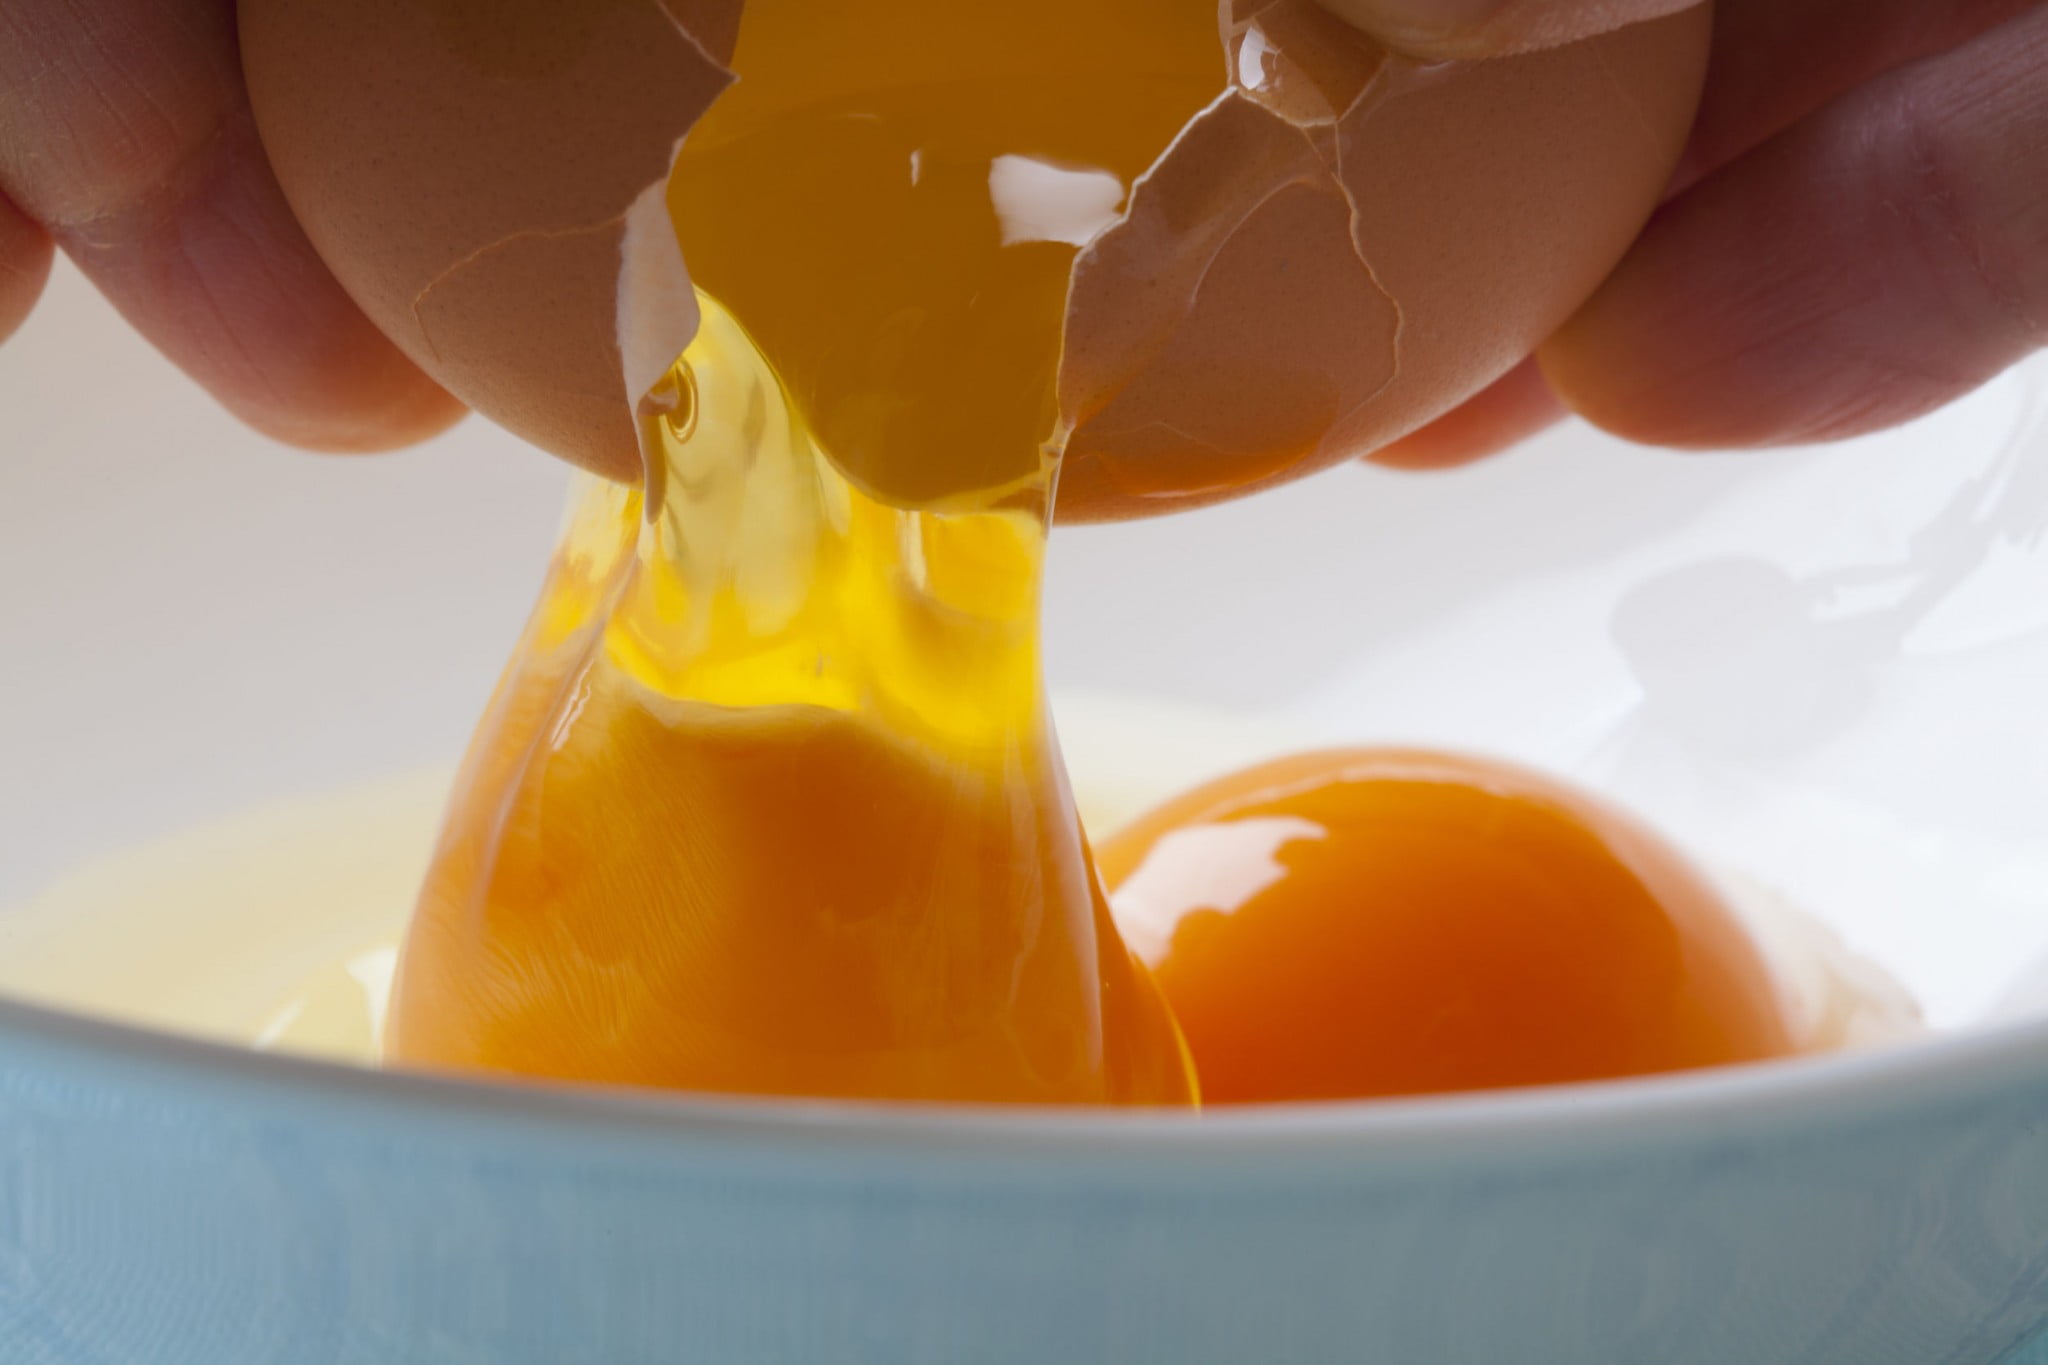 raw egg food poisoning